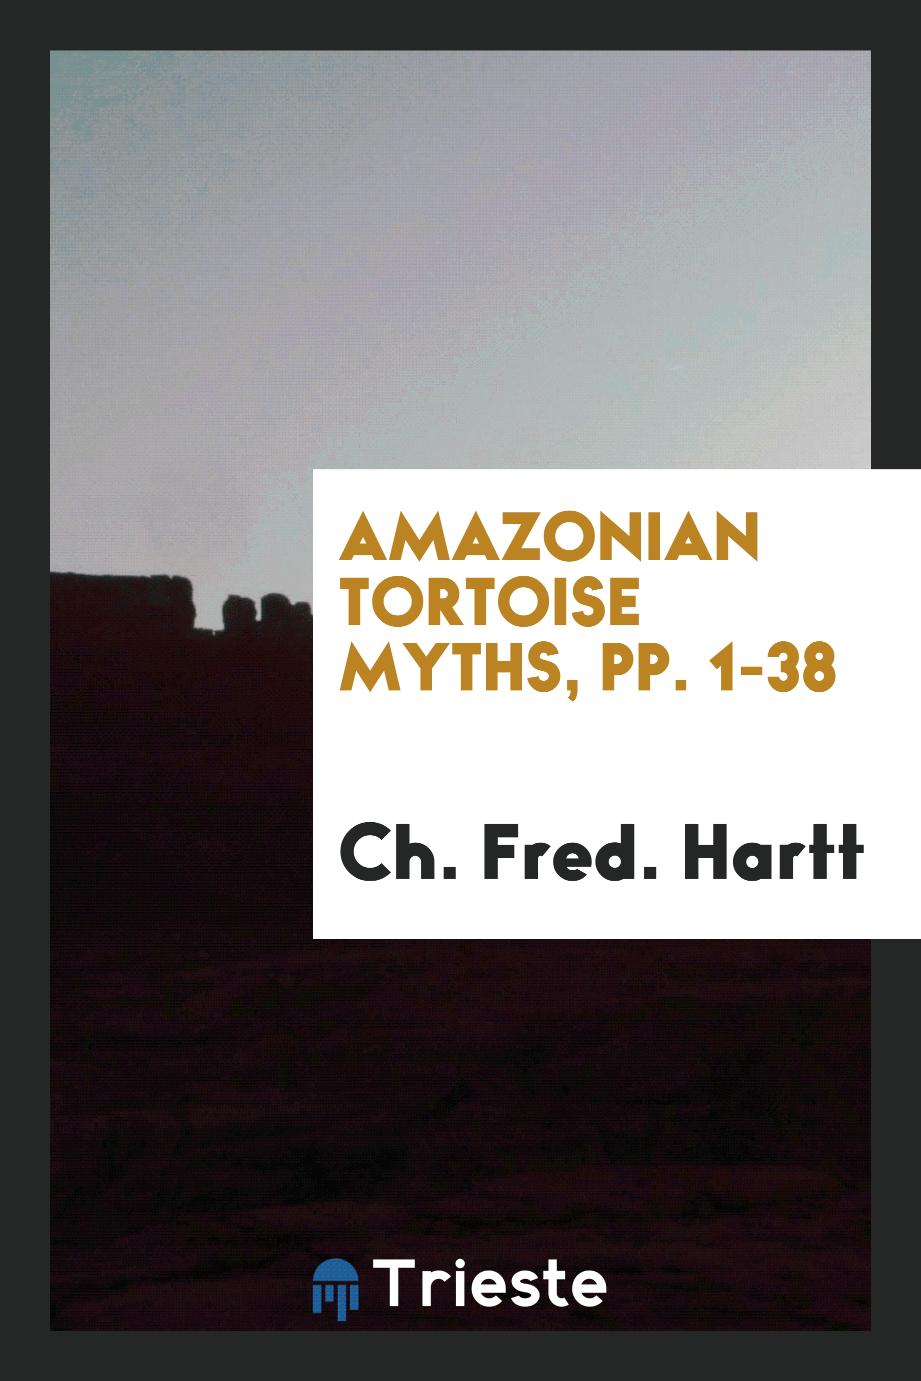 Amazonian Tortoise Myths, pp. 1-38